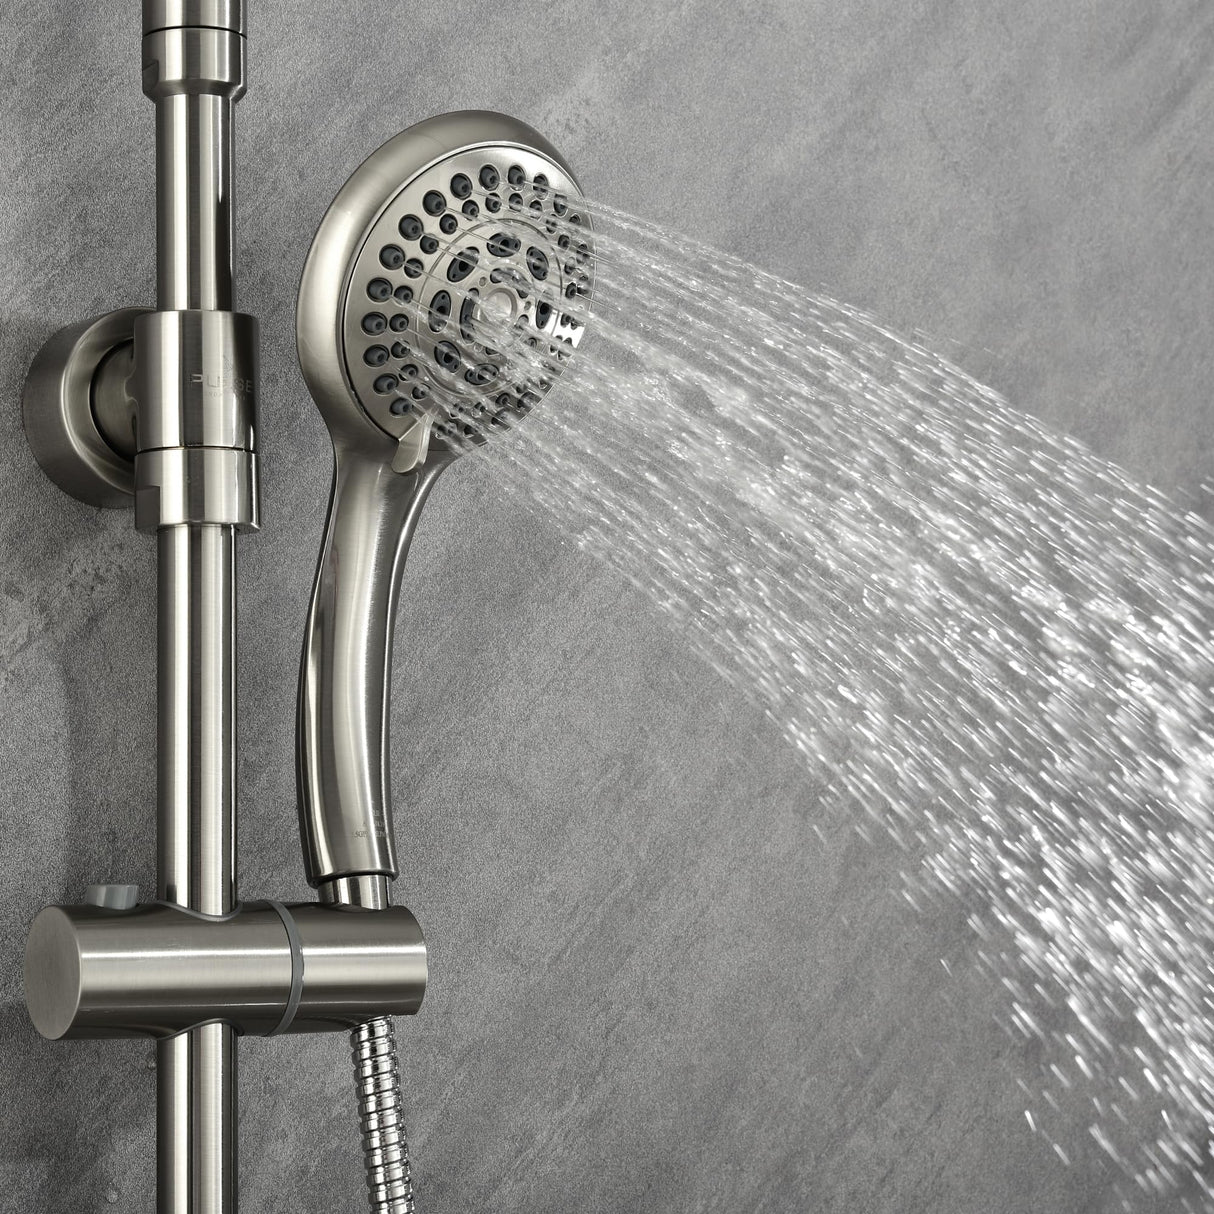 PULSE ShowerSpas 7001-BN Riviera Shower System with 8" Rain Showerhead, 3 Body Sprays, 5-Function Hand Shower, Brushed Nickel Finish